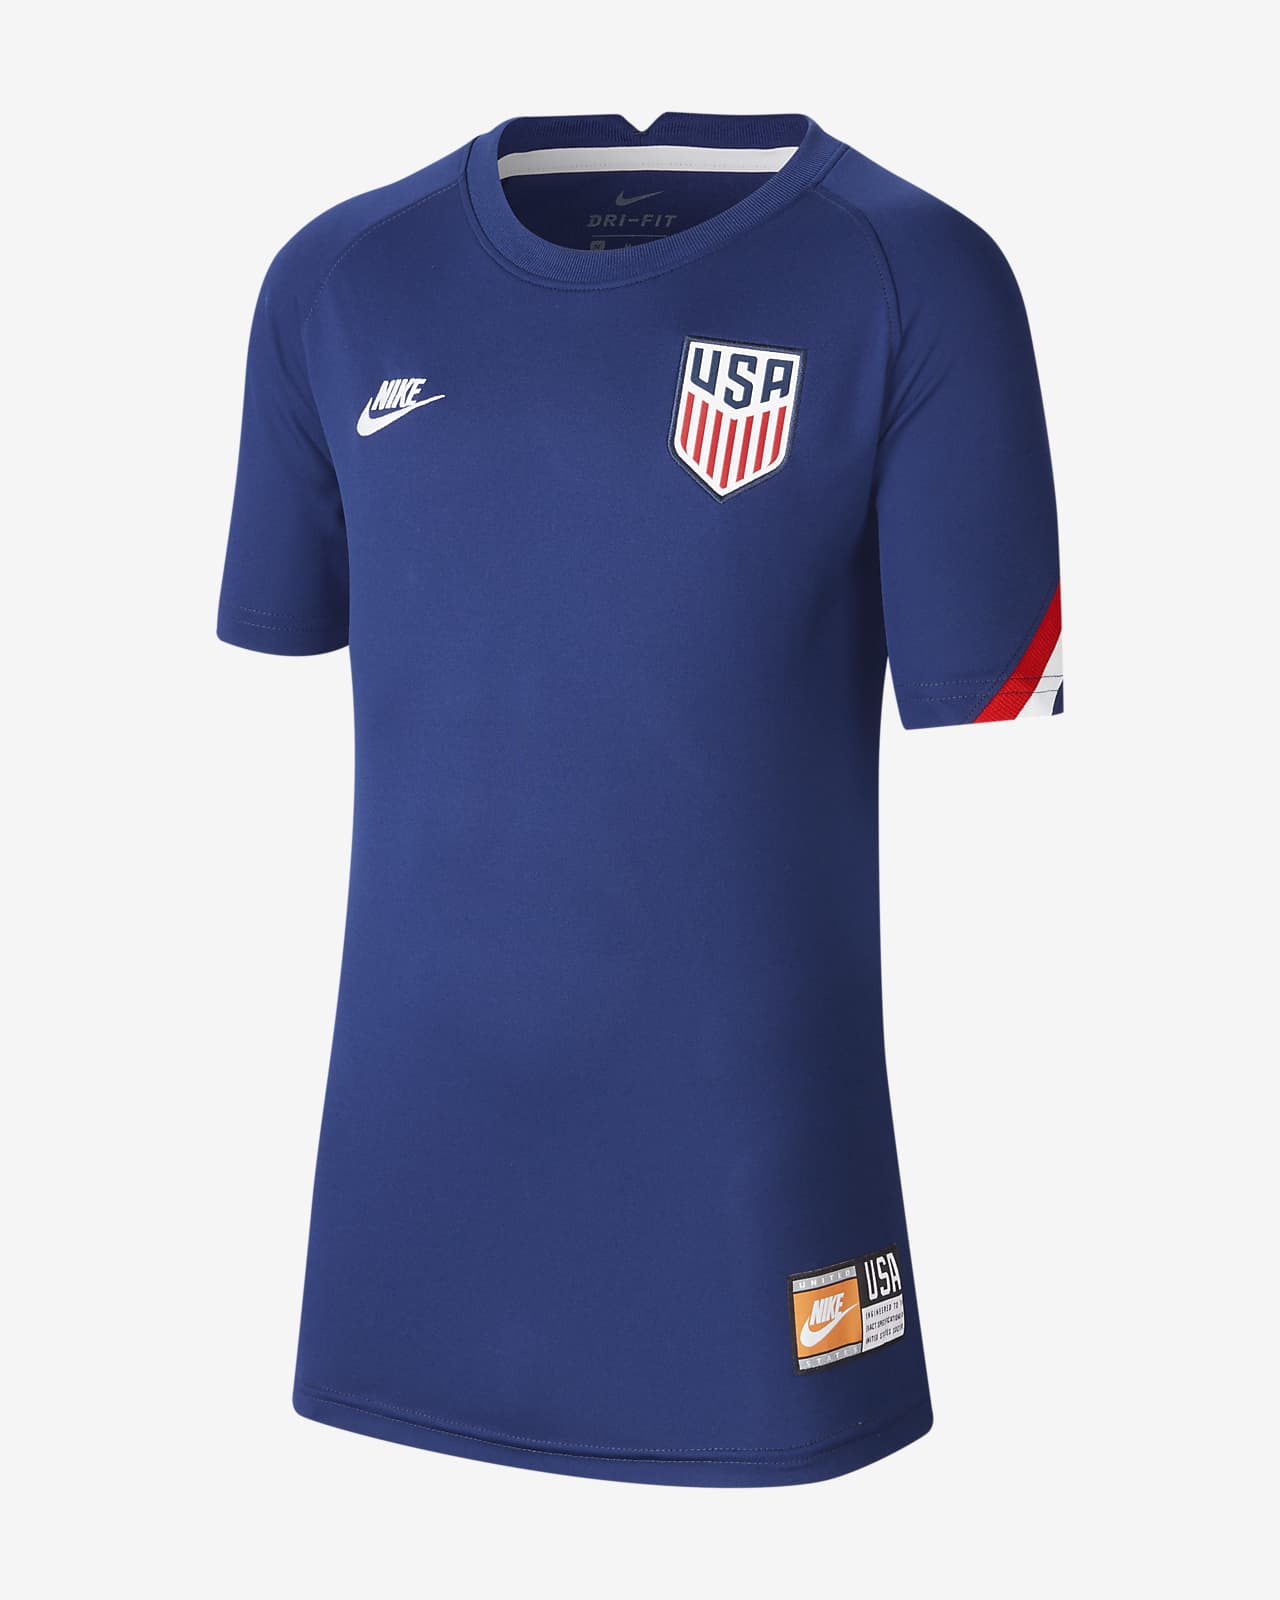 Camiseta de fútbol de manga corta para niños talla grande Estados Unidos.  Nike.com